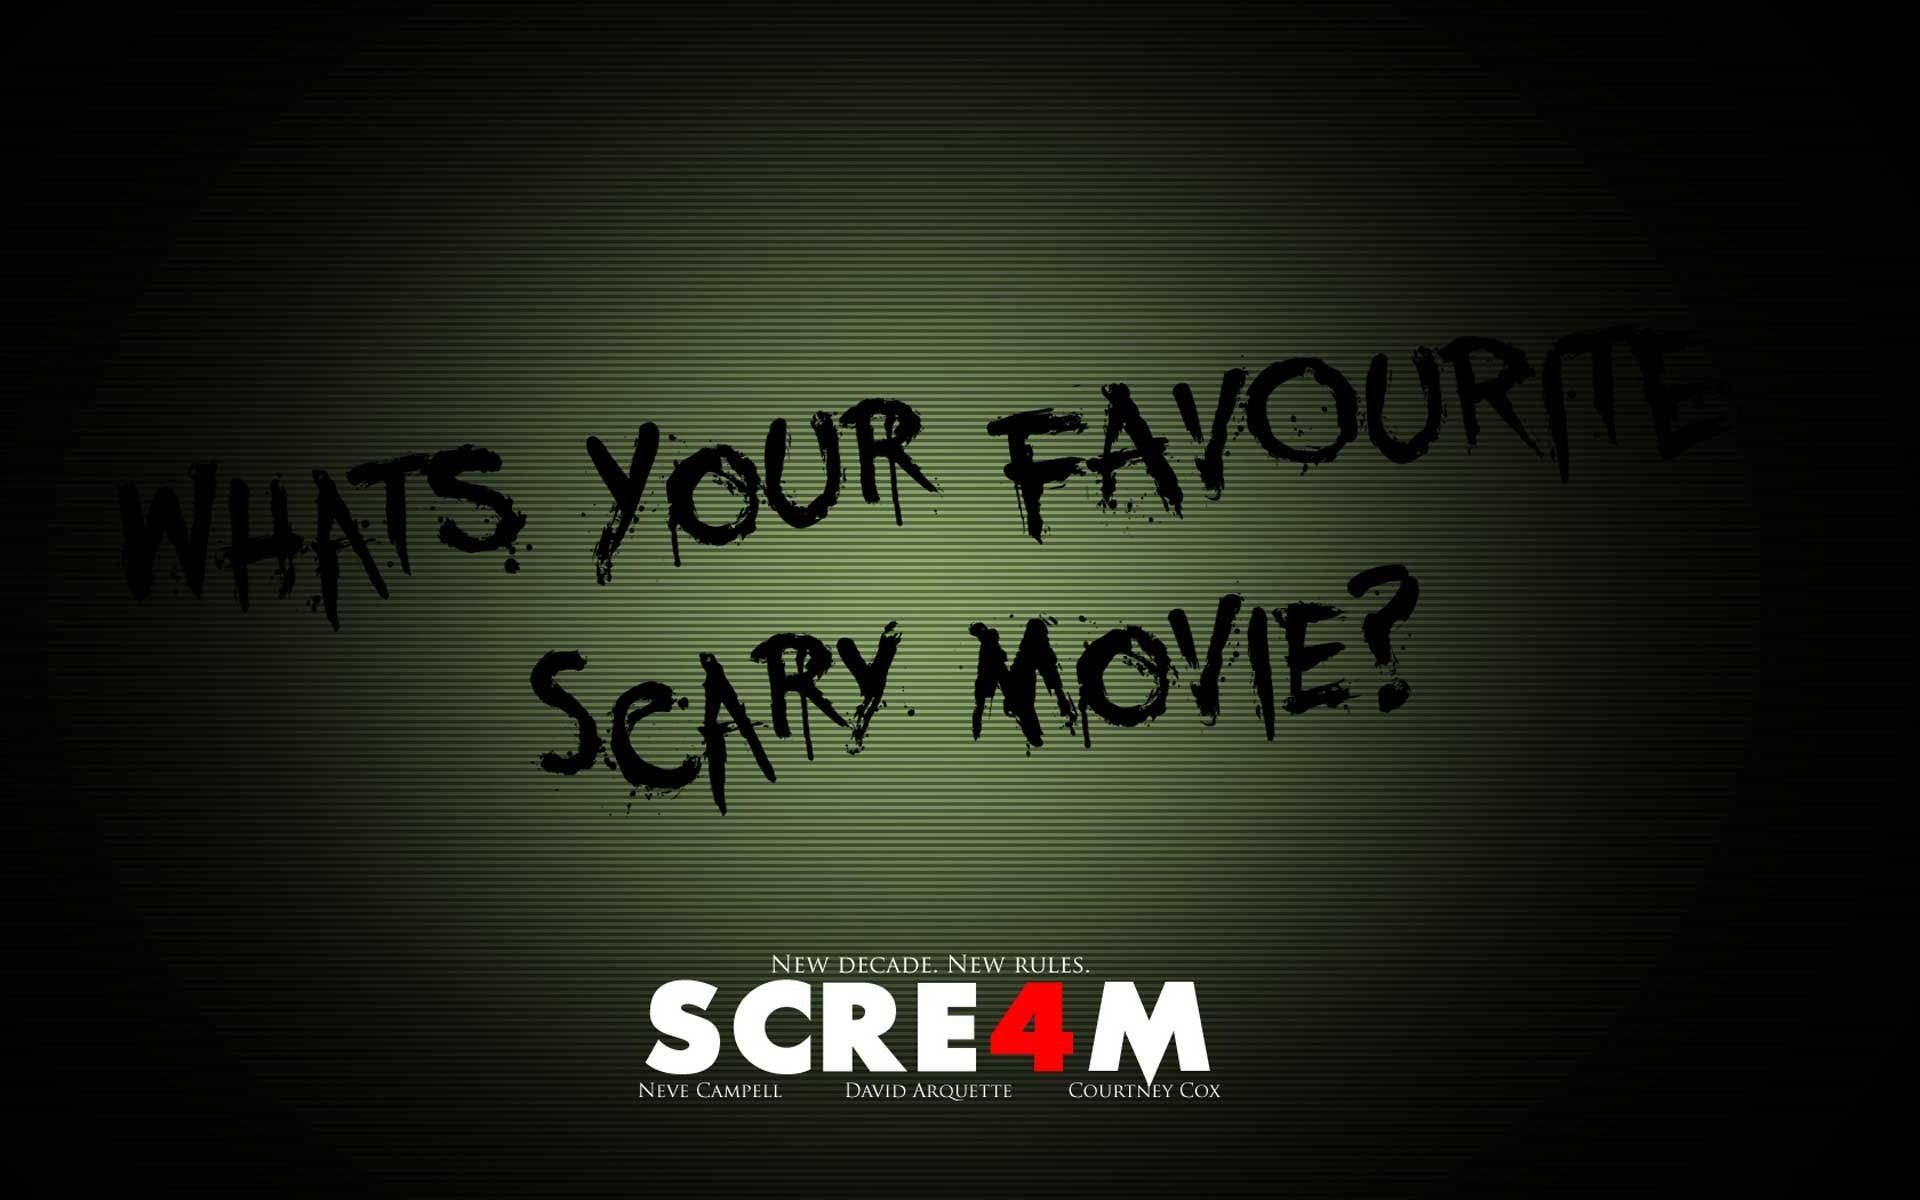 Scream Movie Wallpaper